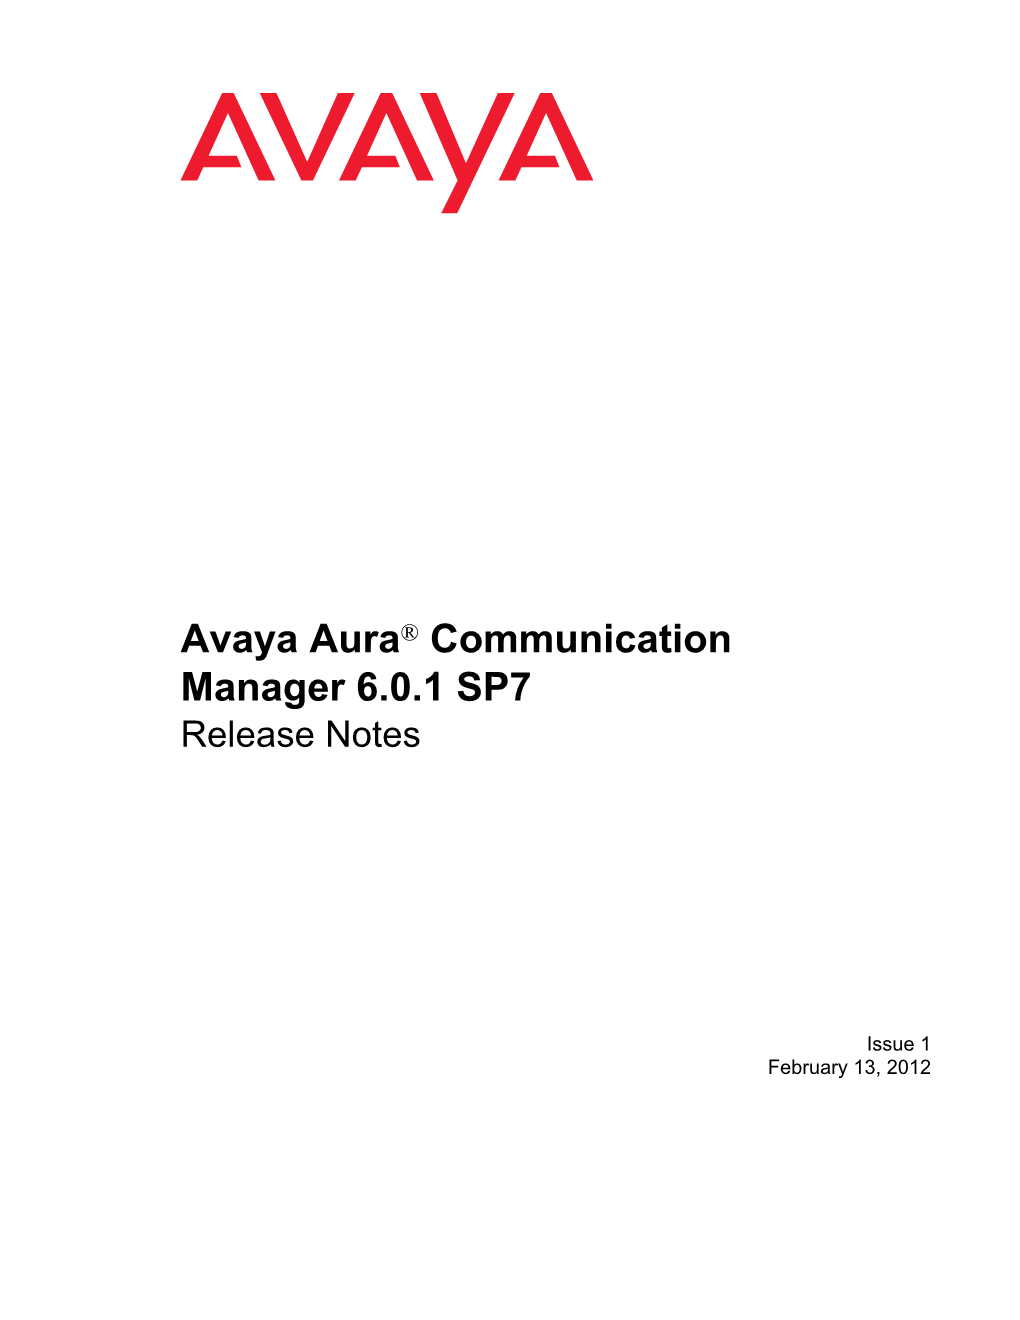 Avaya Aura® Communication Manager 6.0.1 SP7 Release Notes